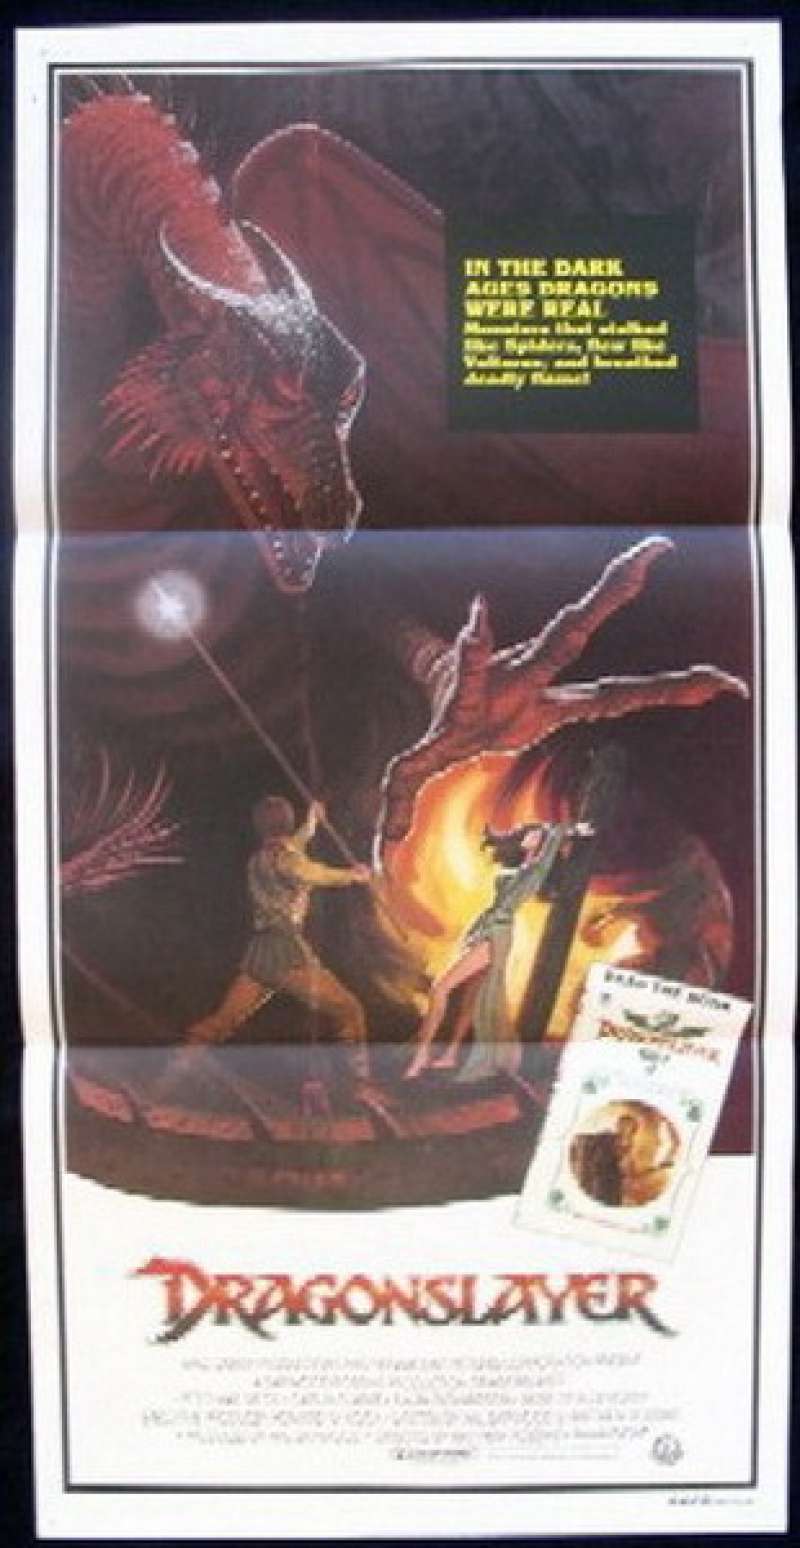 Fantasy movie done right: Dragonslayer (1981)